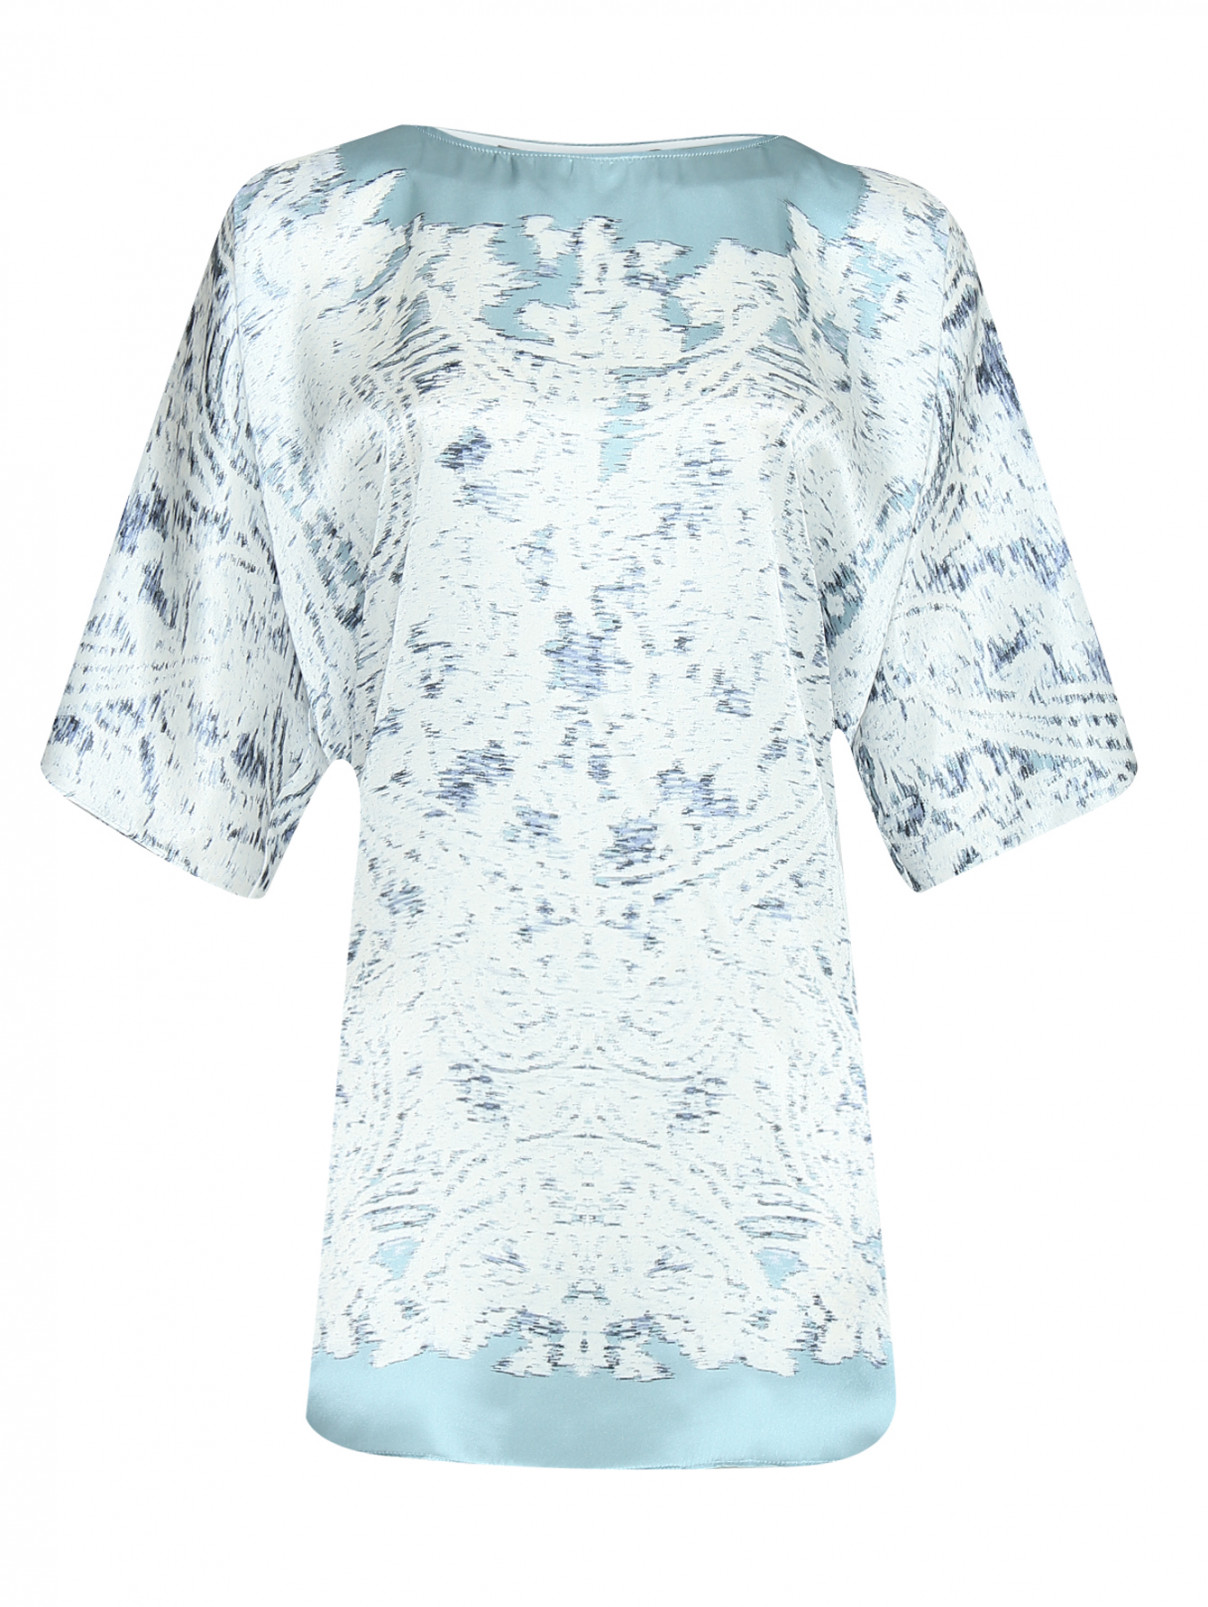 Блуза из шелка с узором Marina Rinaldi  –  Общий вид  – Цвет:  Синий